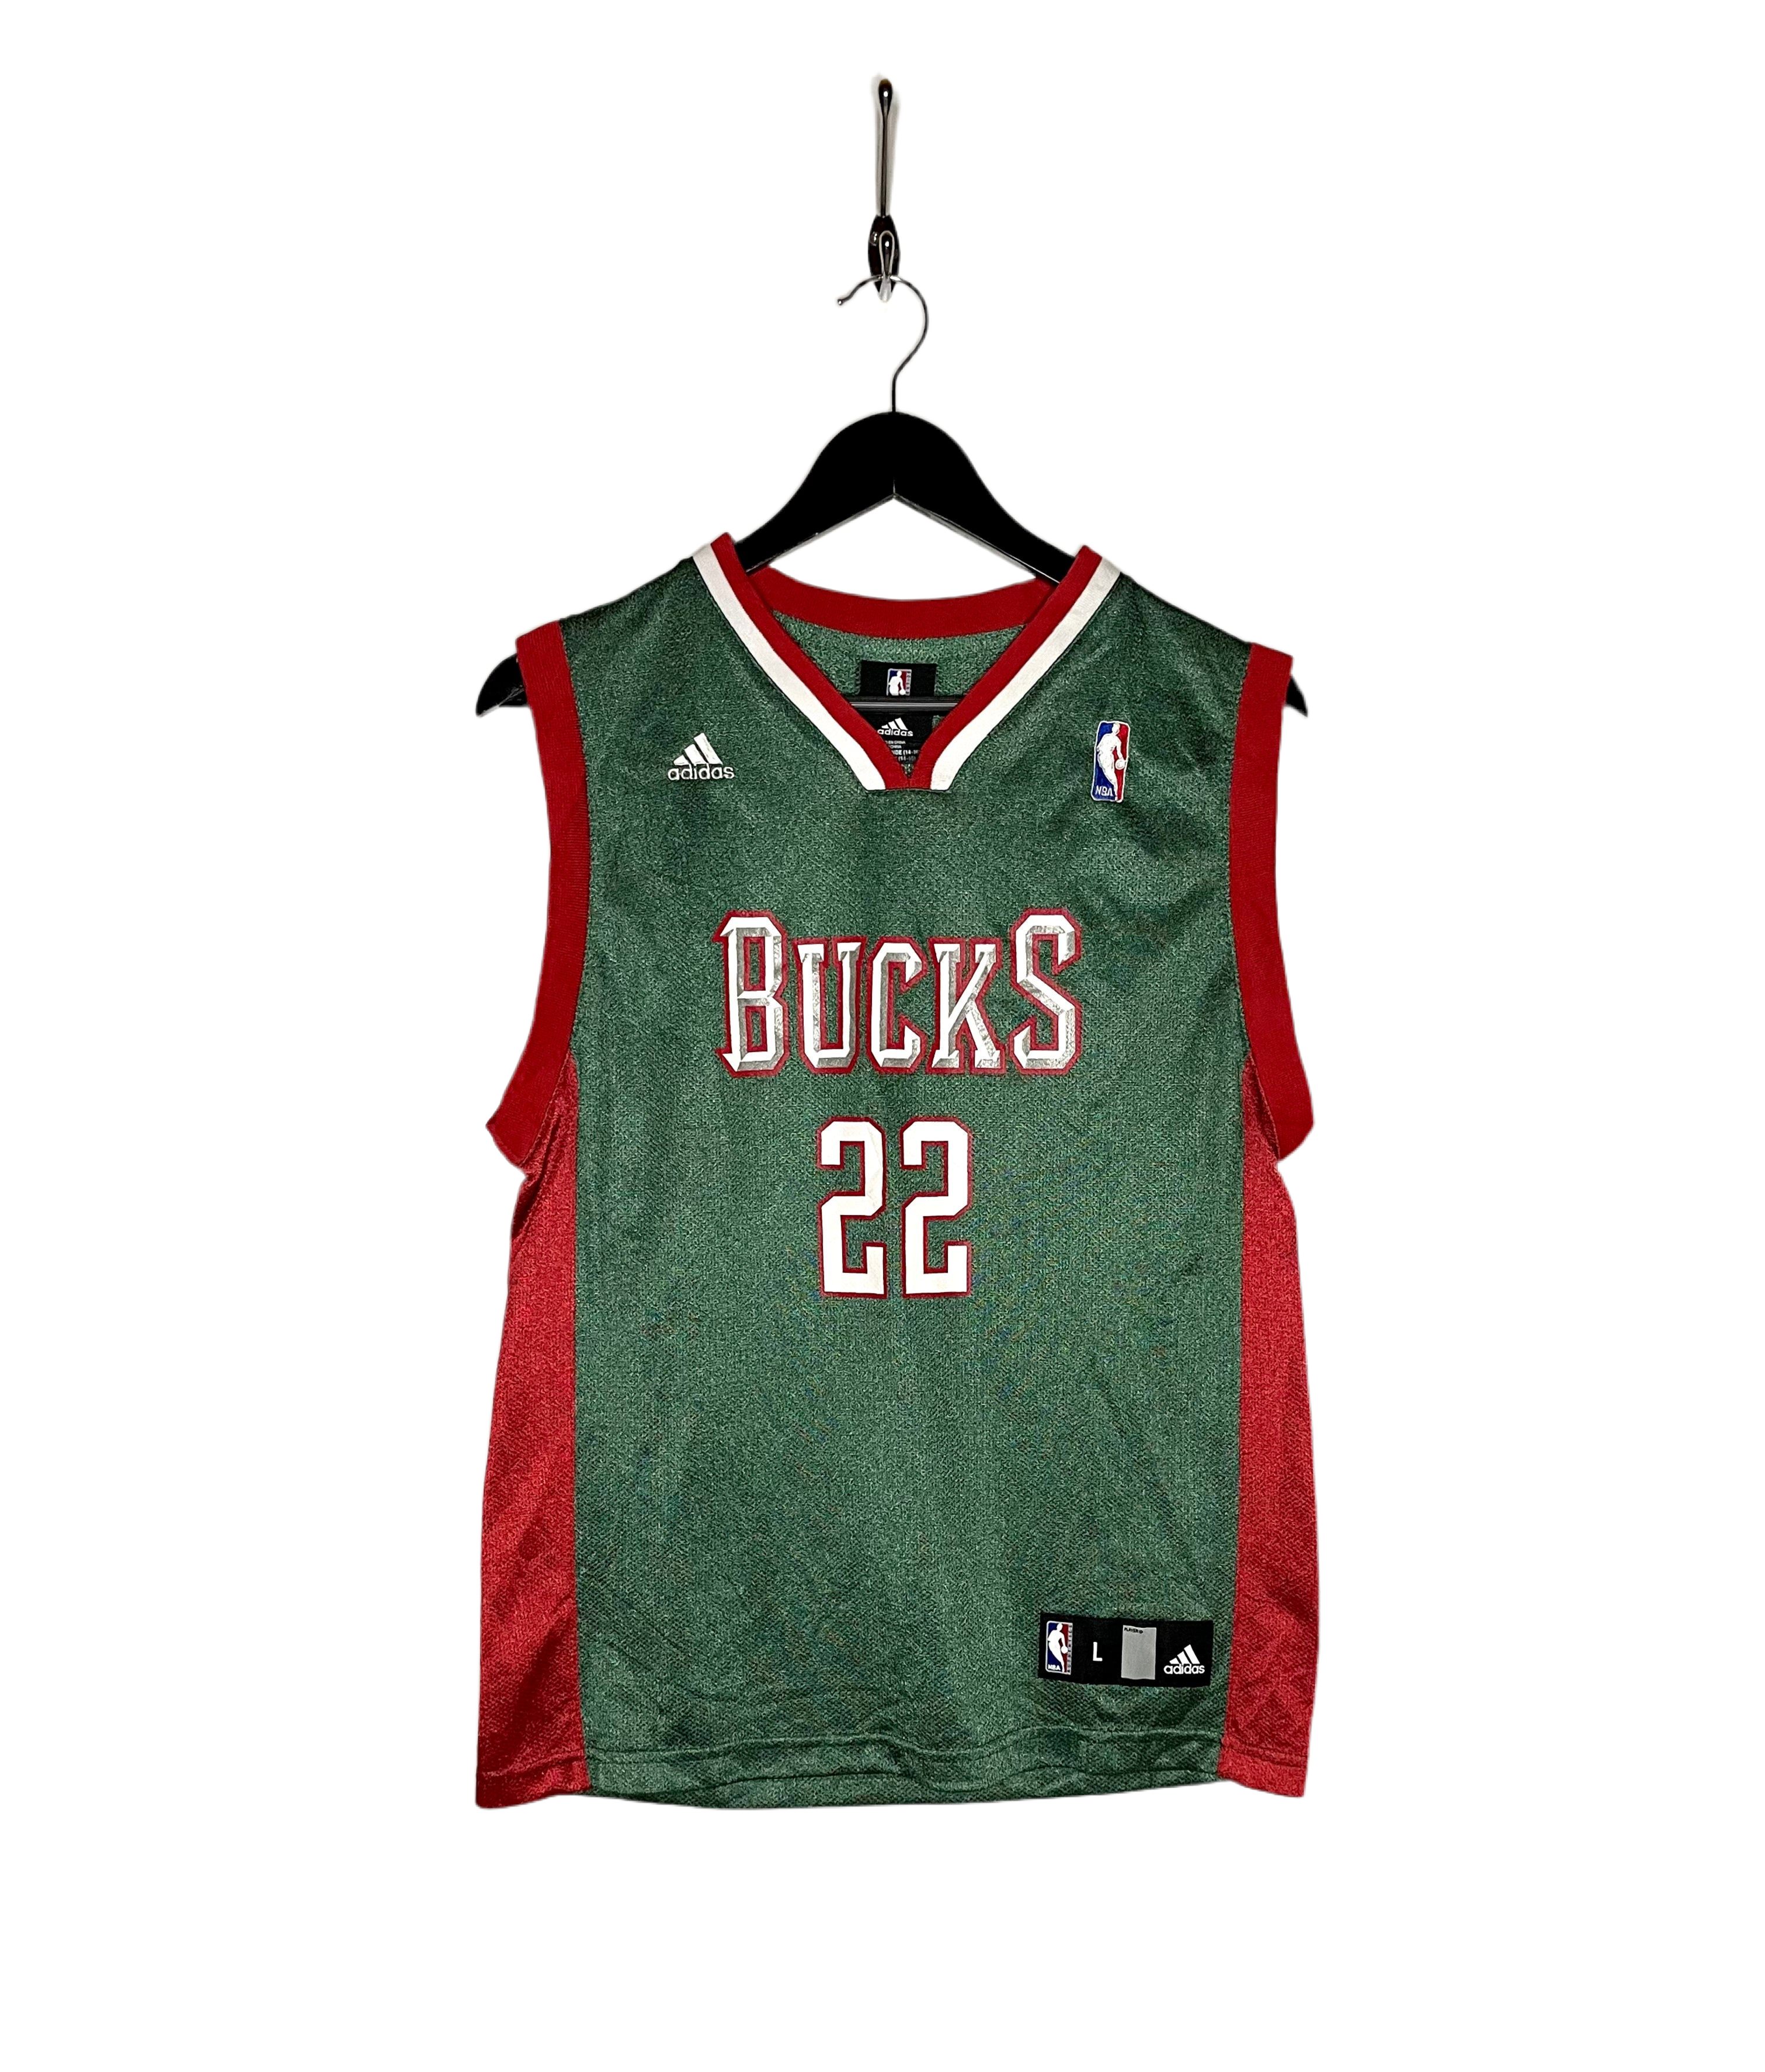 Adidas Jersey Milwaukee Bucks Michael Redd #22 Green Size L 